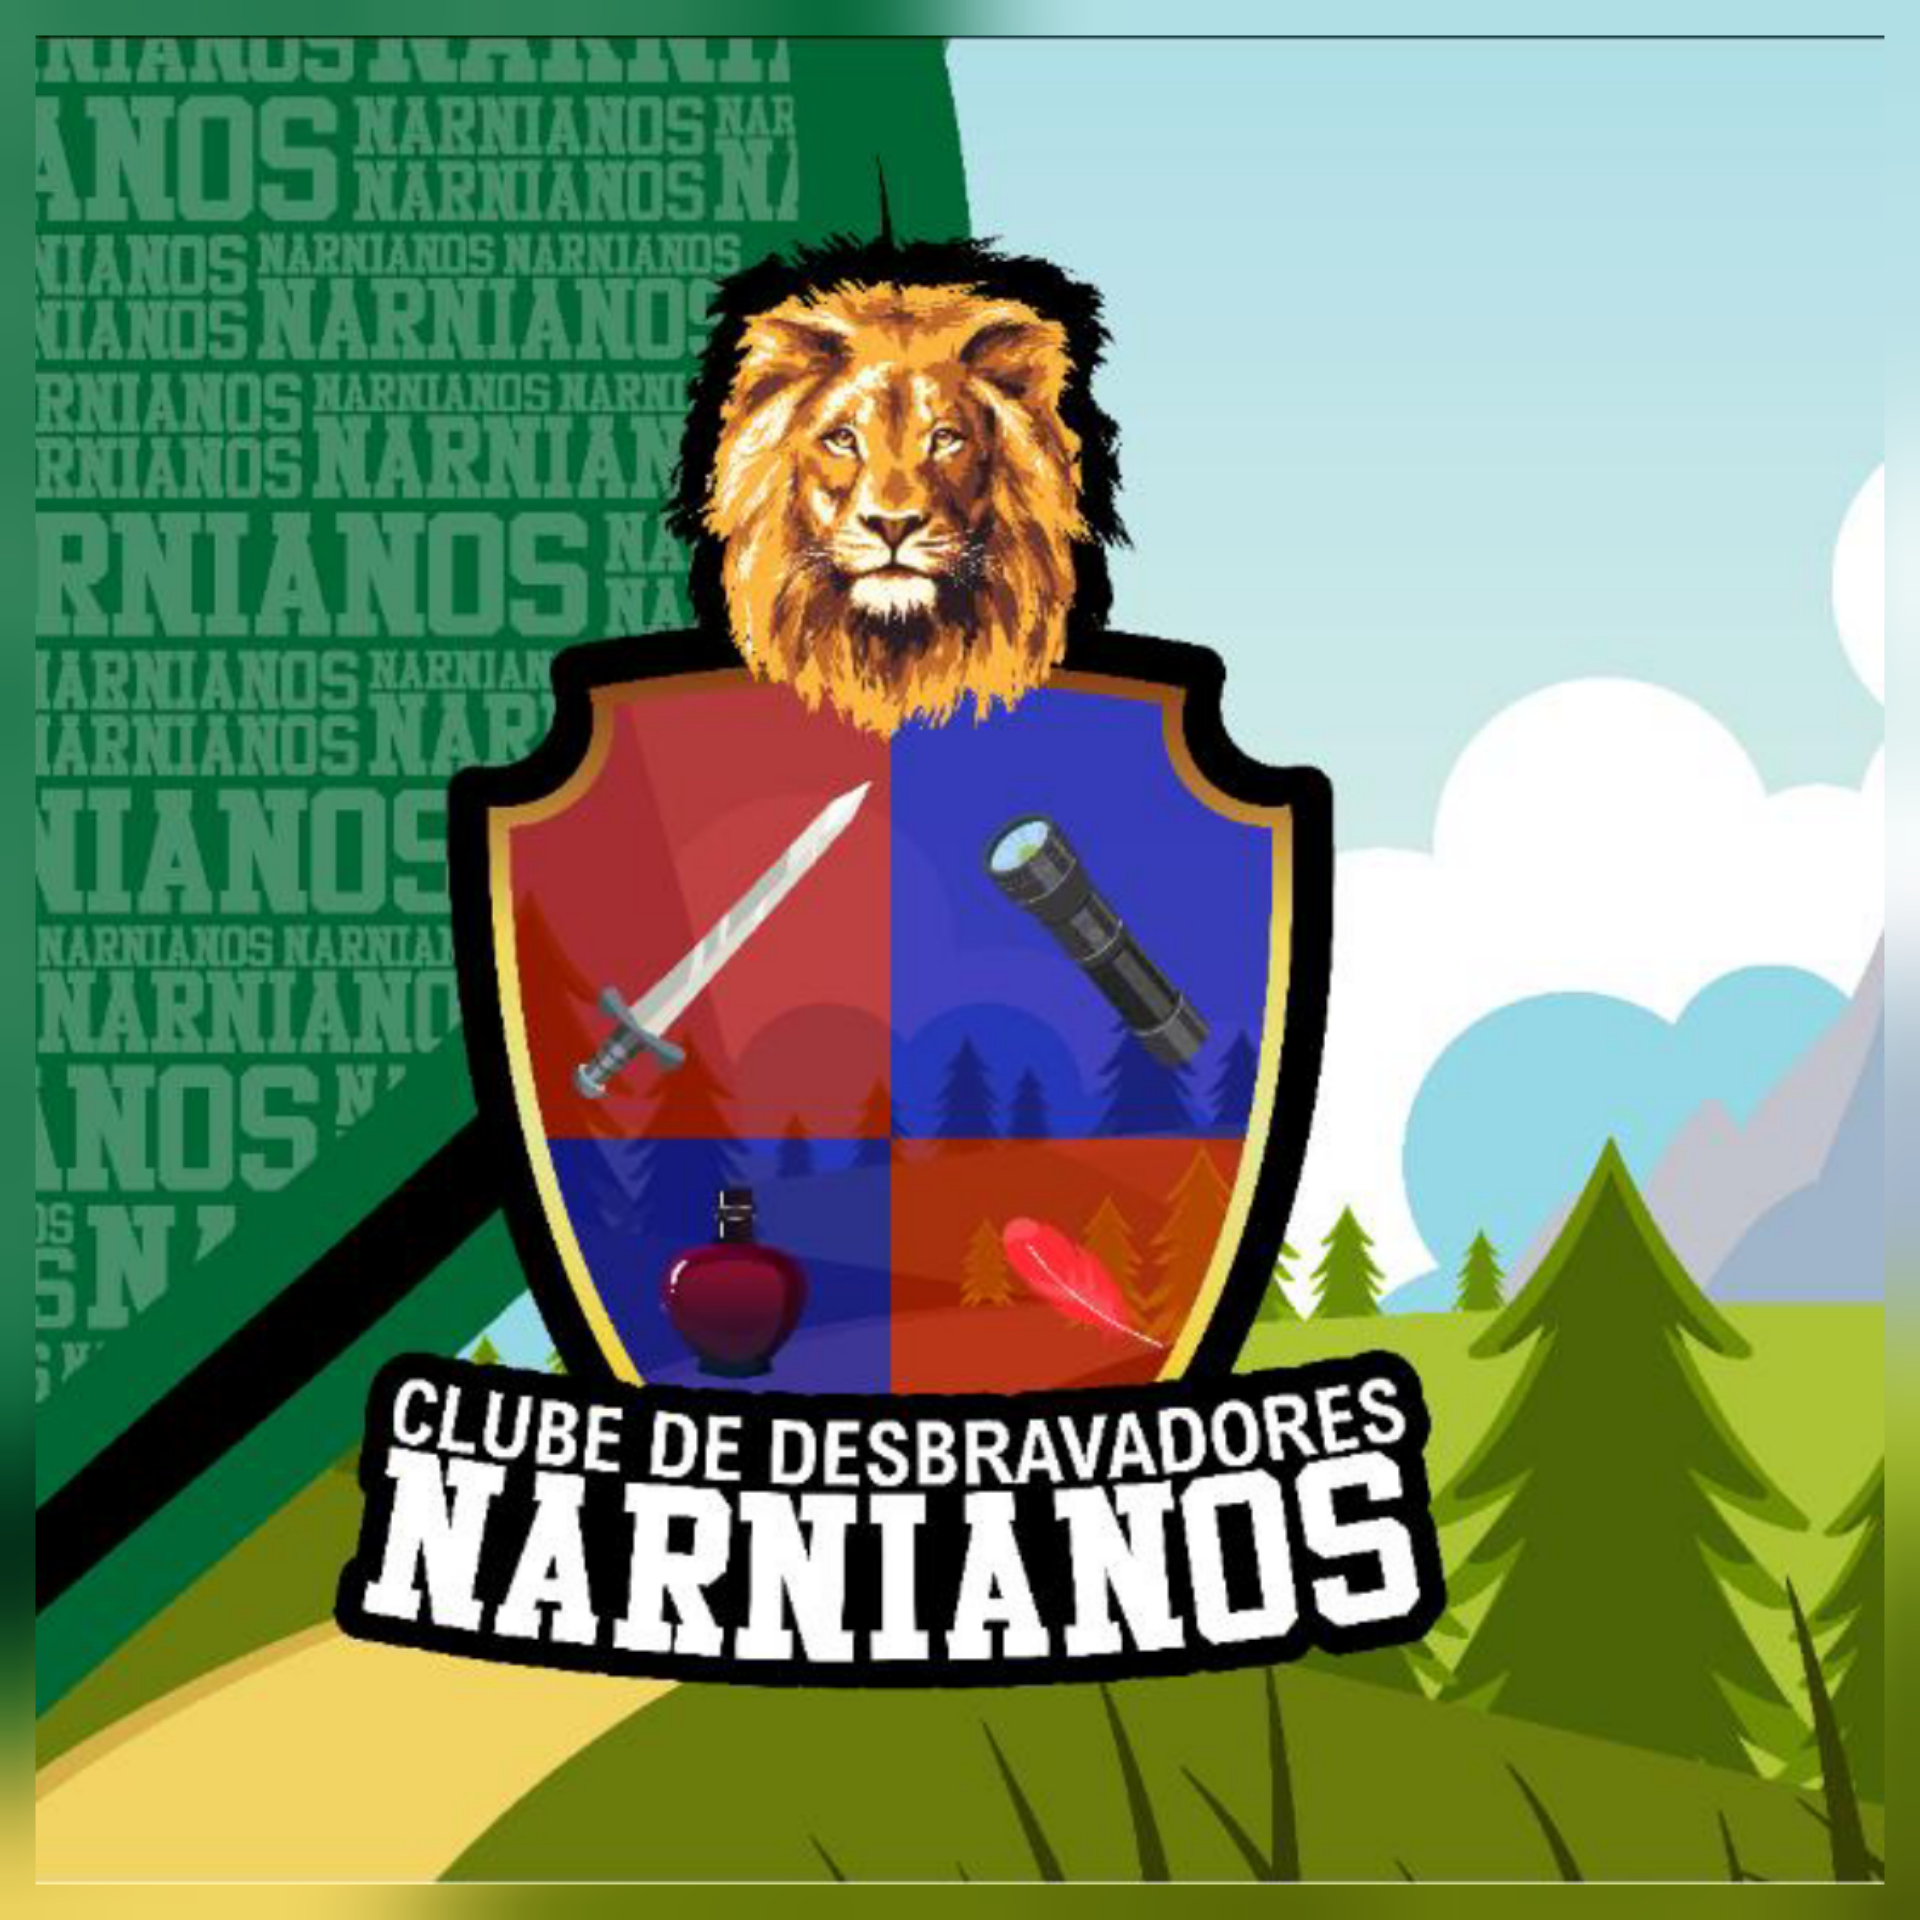 Narnianos